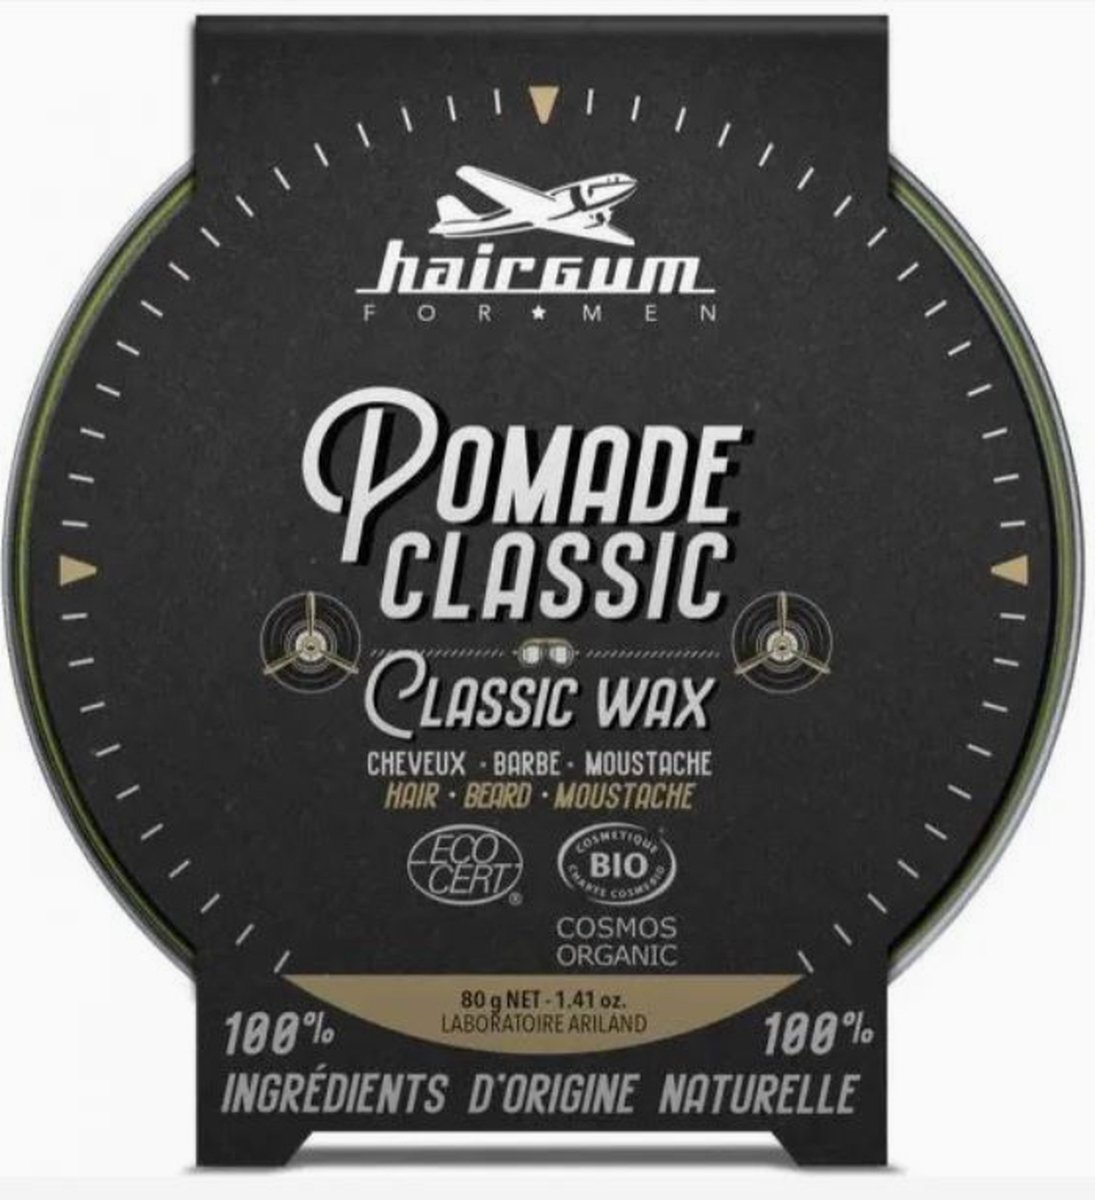 Hairgum For Men Classic Wax